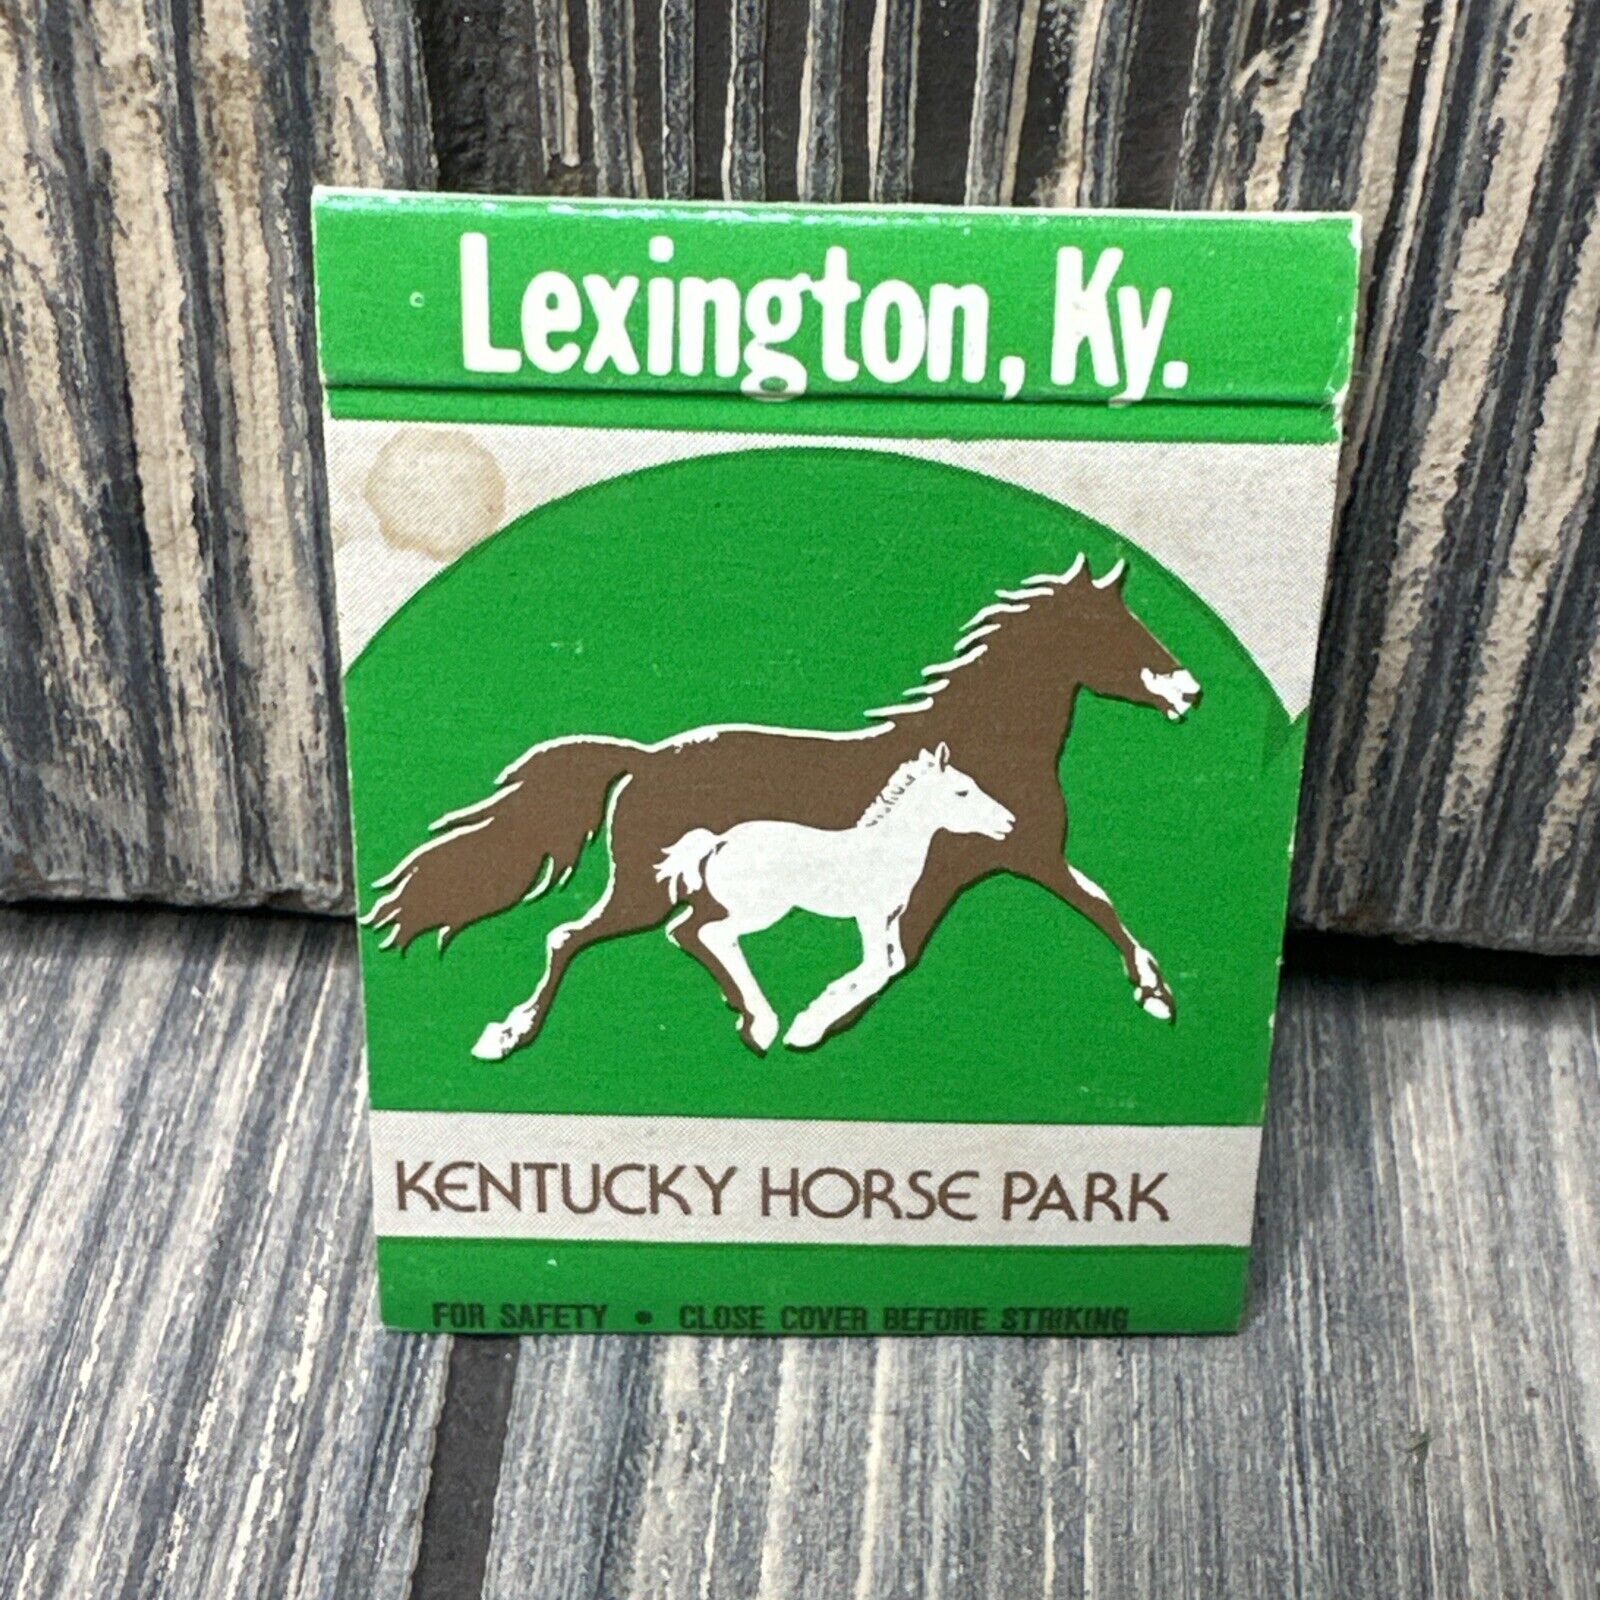 Vtg Kentucky Horse Park Lexington KY Green Matchbook